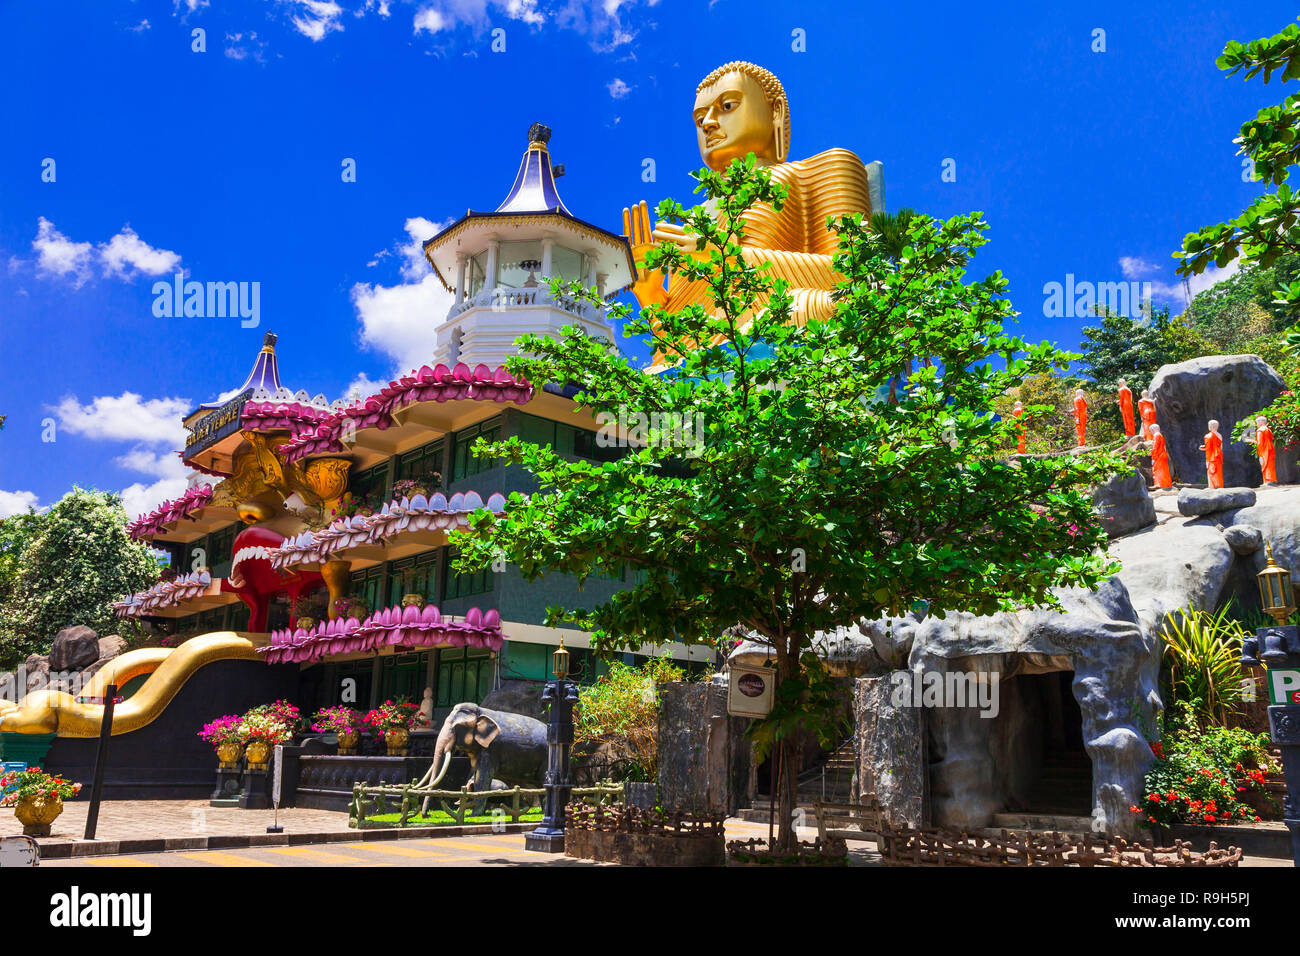 Dambula impressionnant temple de Sri Lanka, de l'Asie. Banque D'Images